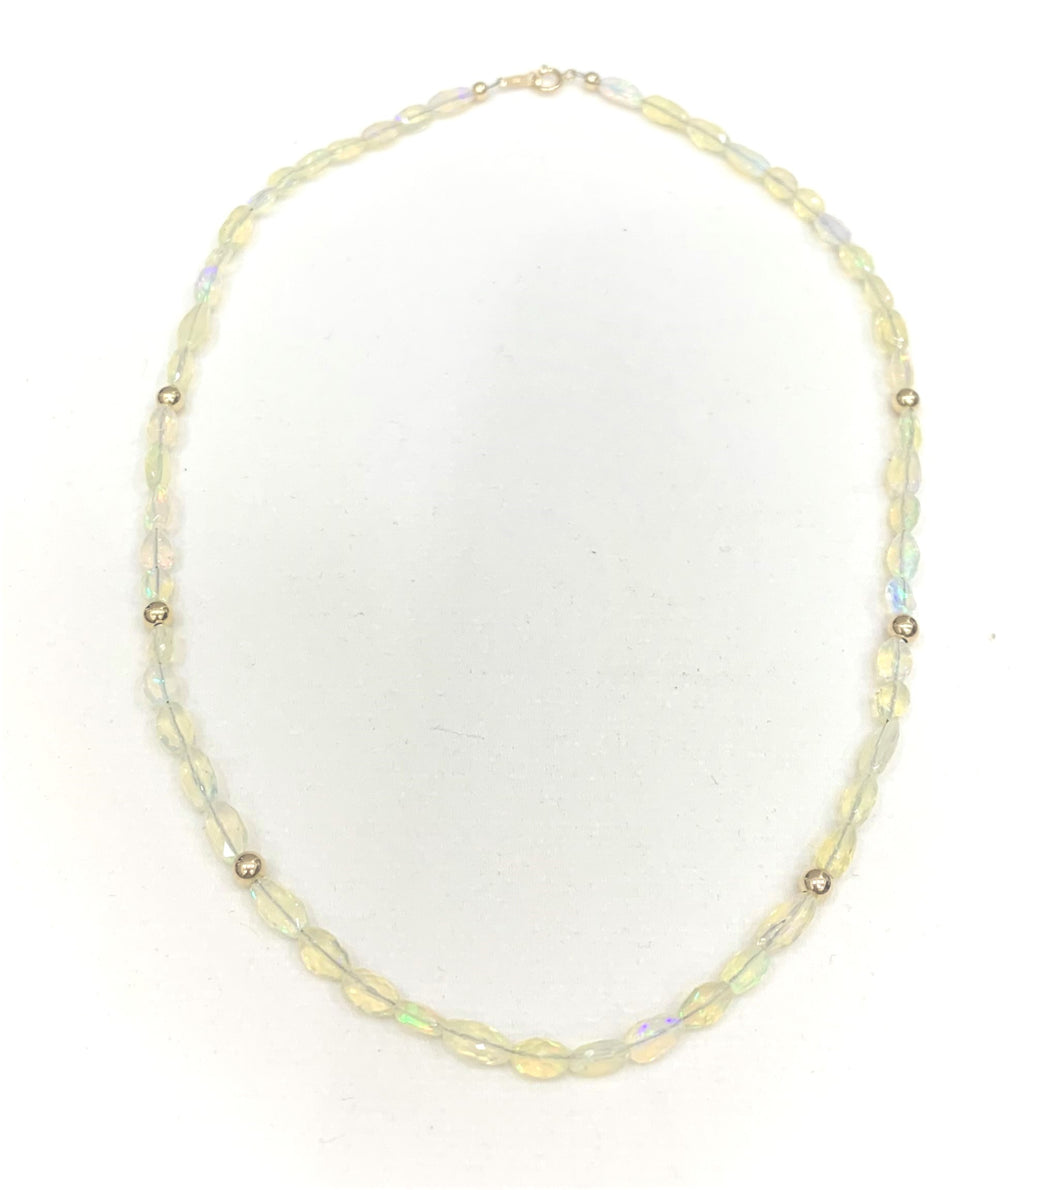 Handmade Ethiopian Opal Bead Necklace